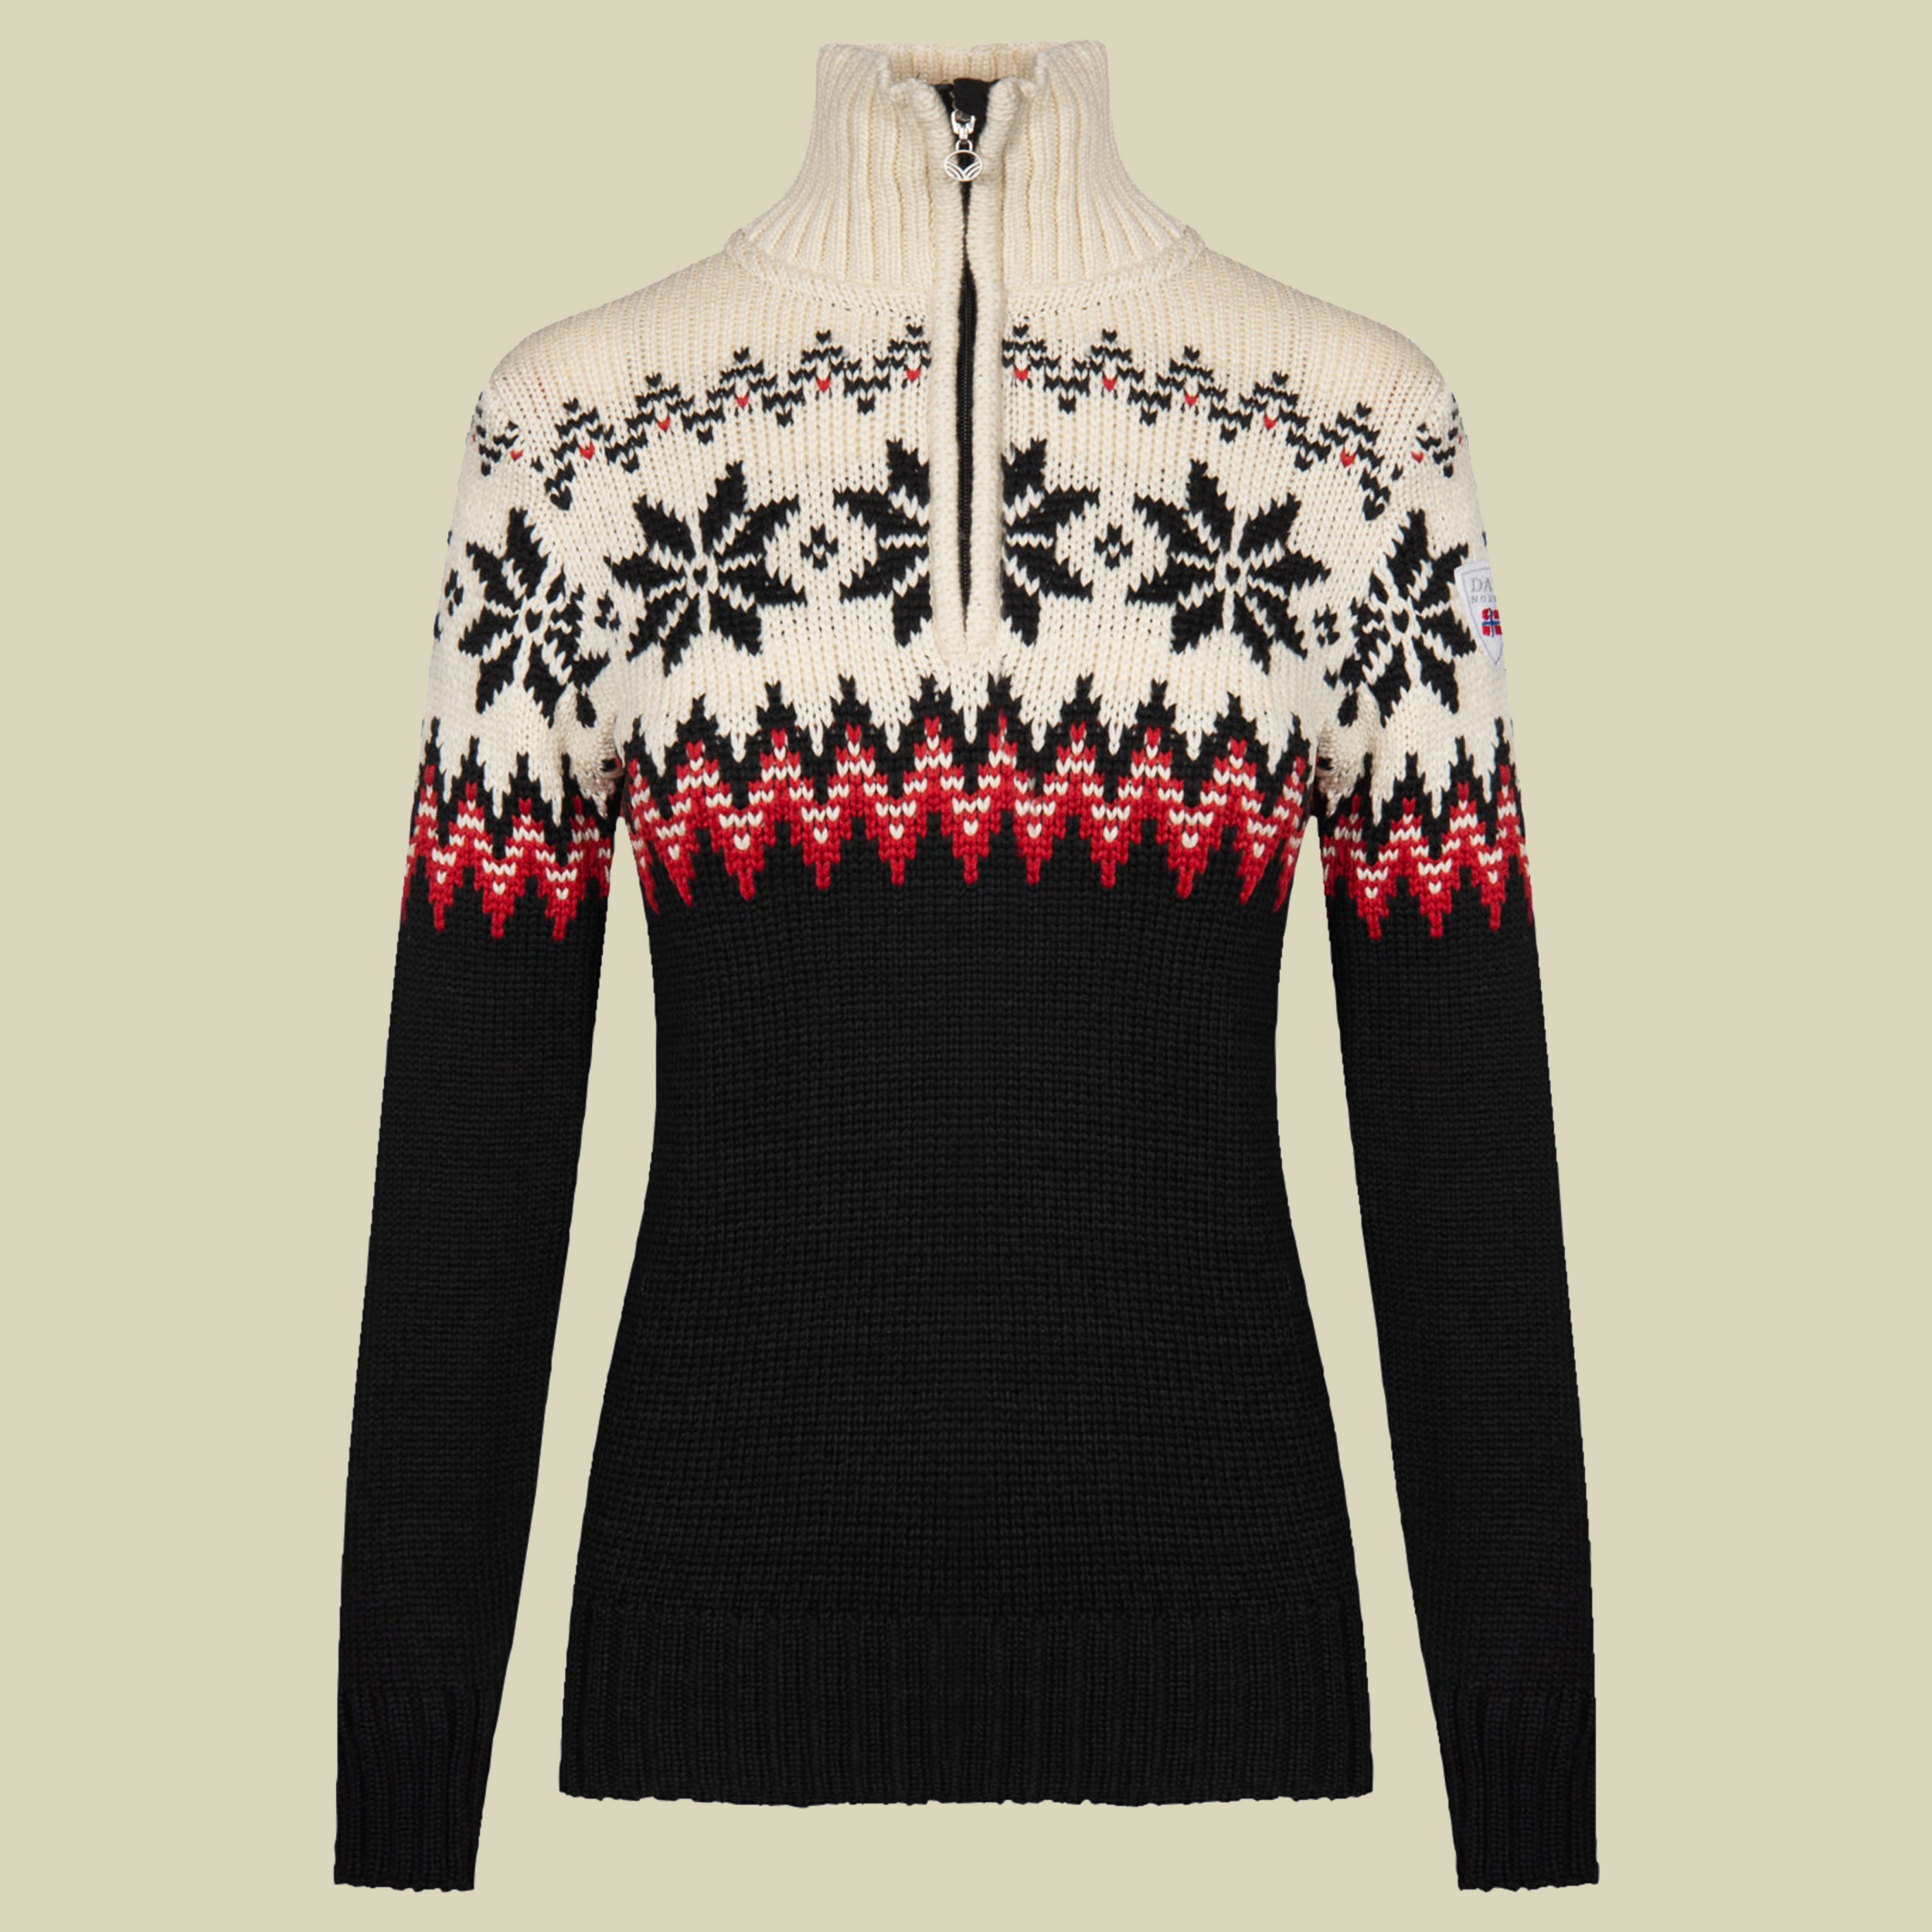 Myking Sweater Women Größe S Farbe black-raspberry-off white